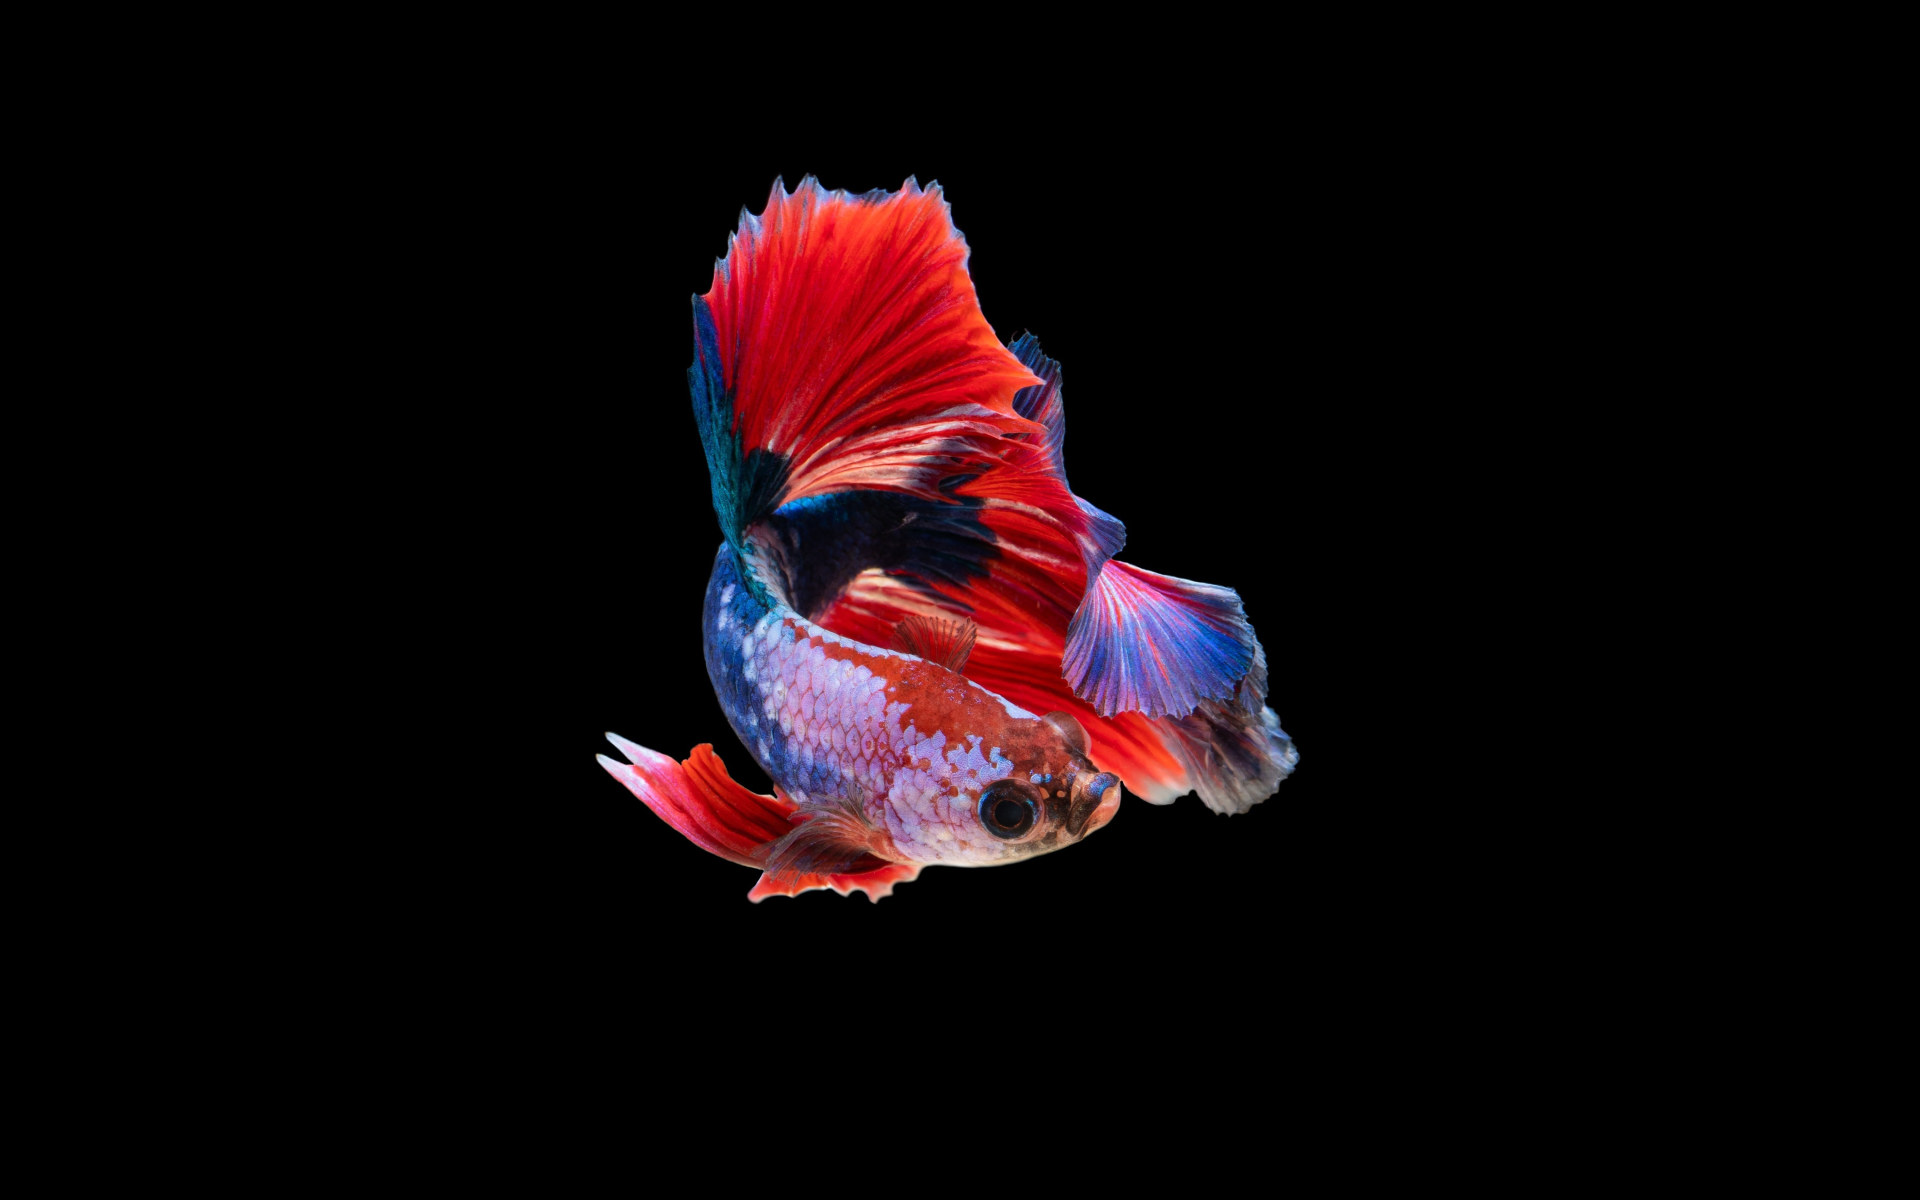 Siamese fighting fish wallpaper, dark, amoled, animals, animal themes • Wallpaper For You HD Wallpaper For Desktop & Mobile